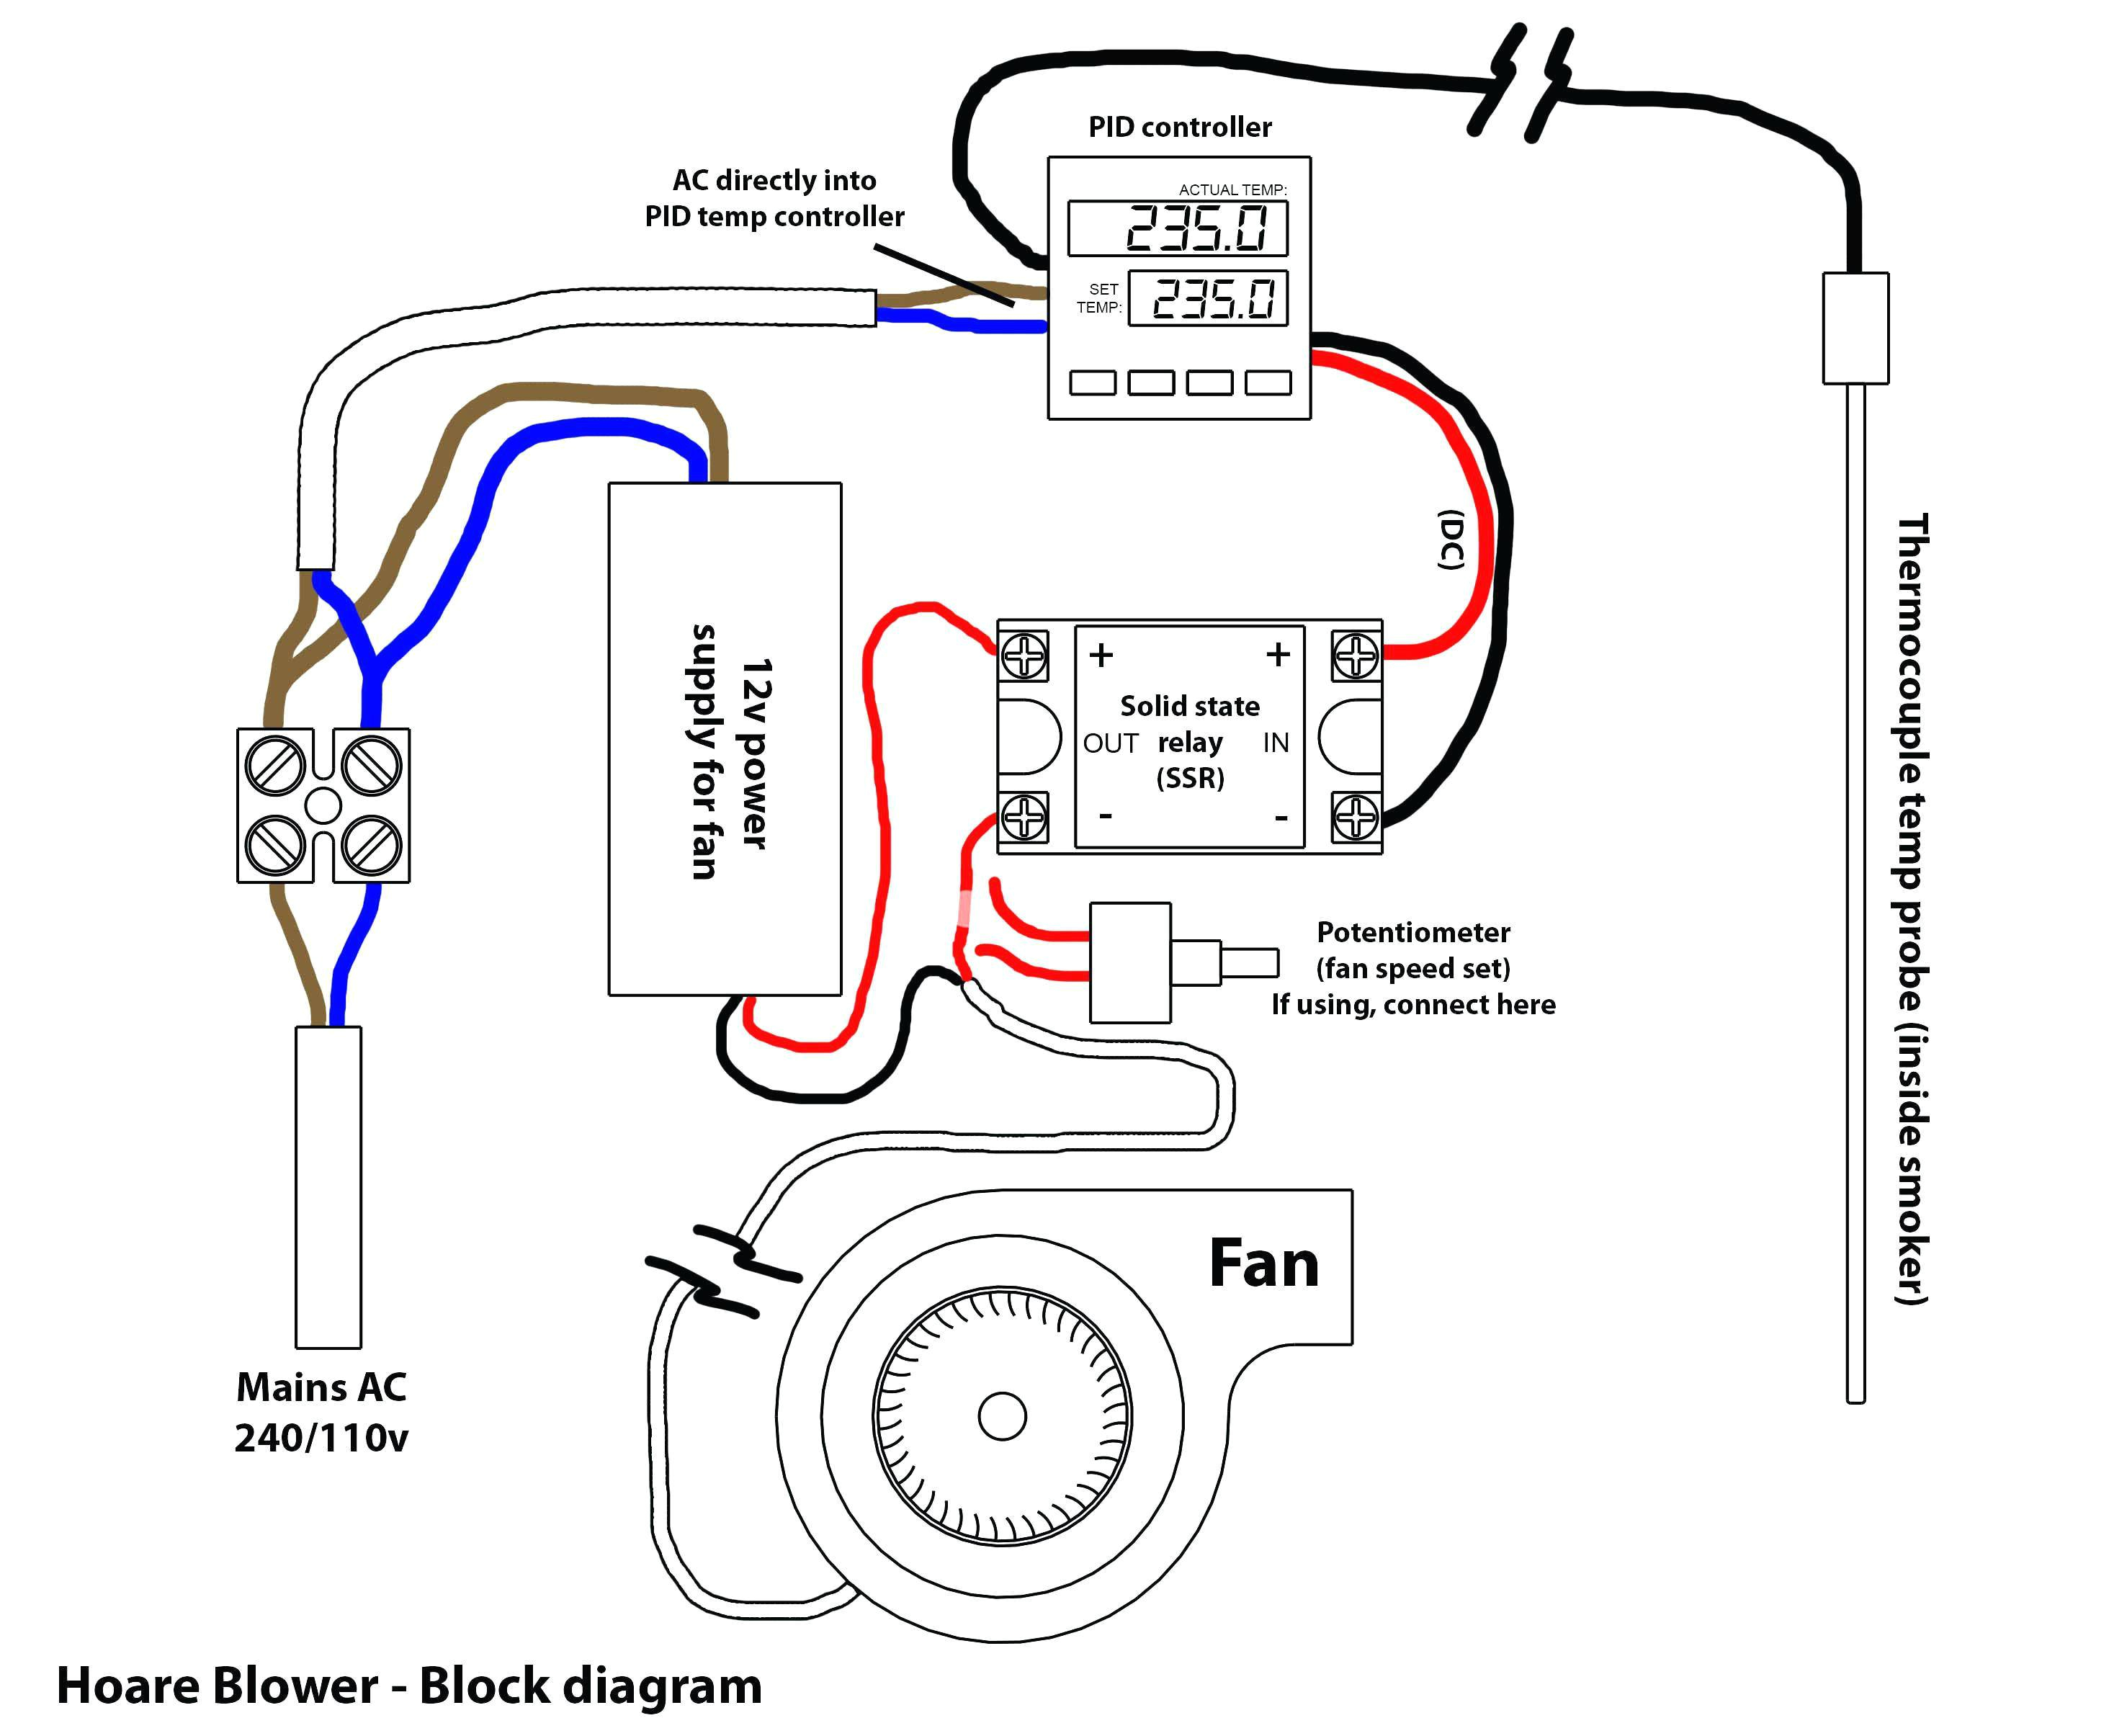 pid wiring diagram powder coat wiring diagram article review pid wiring diagram powder coat